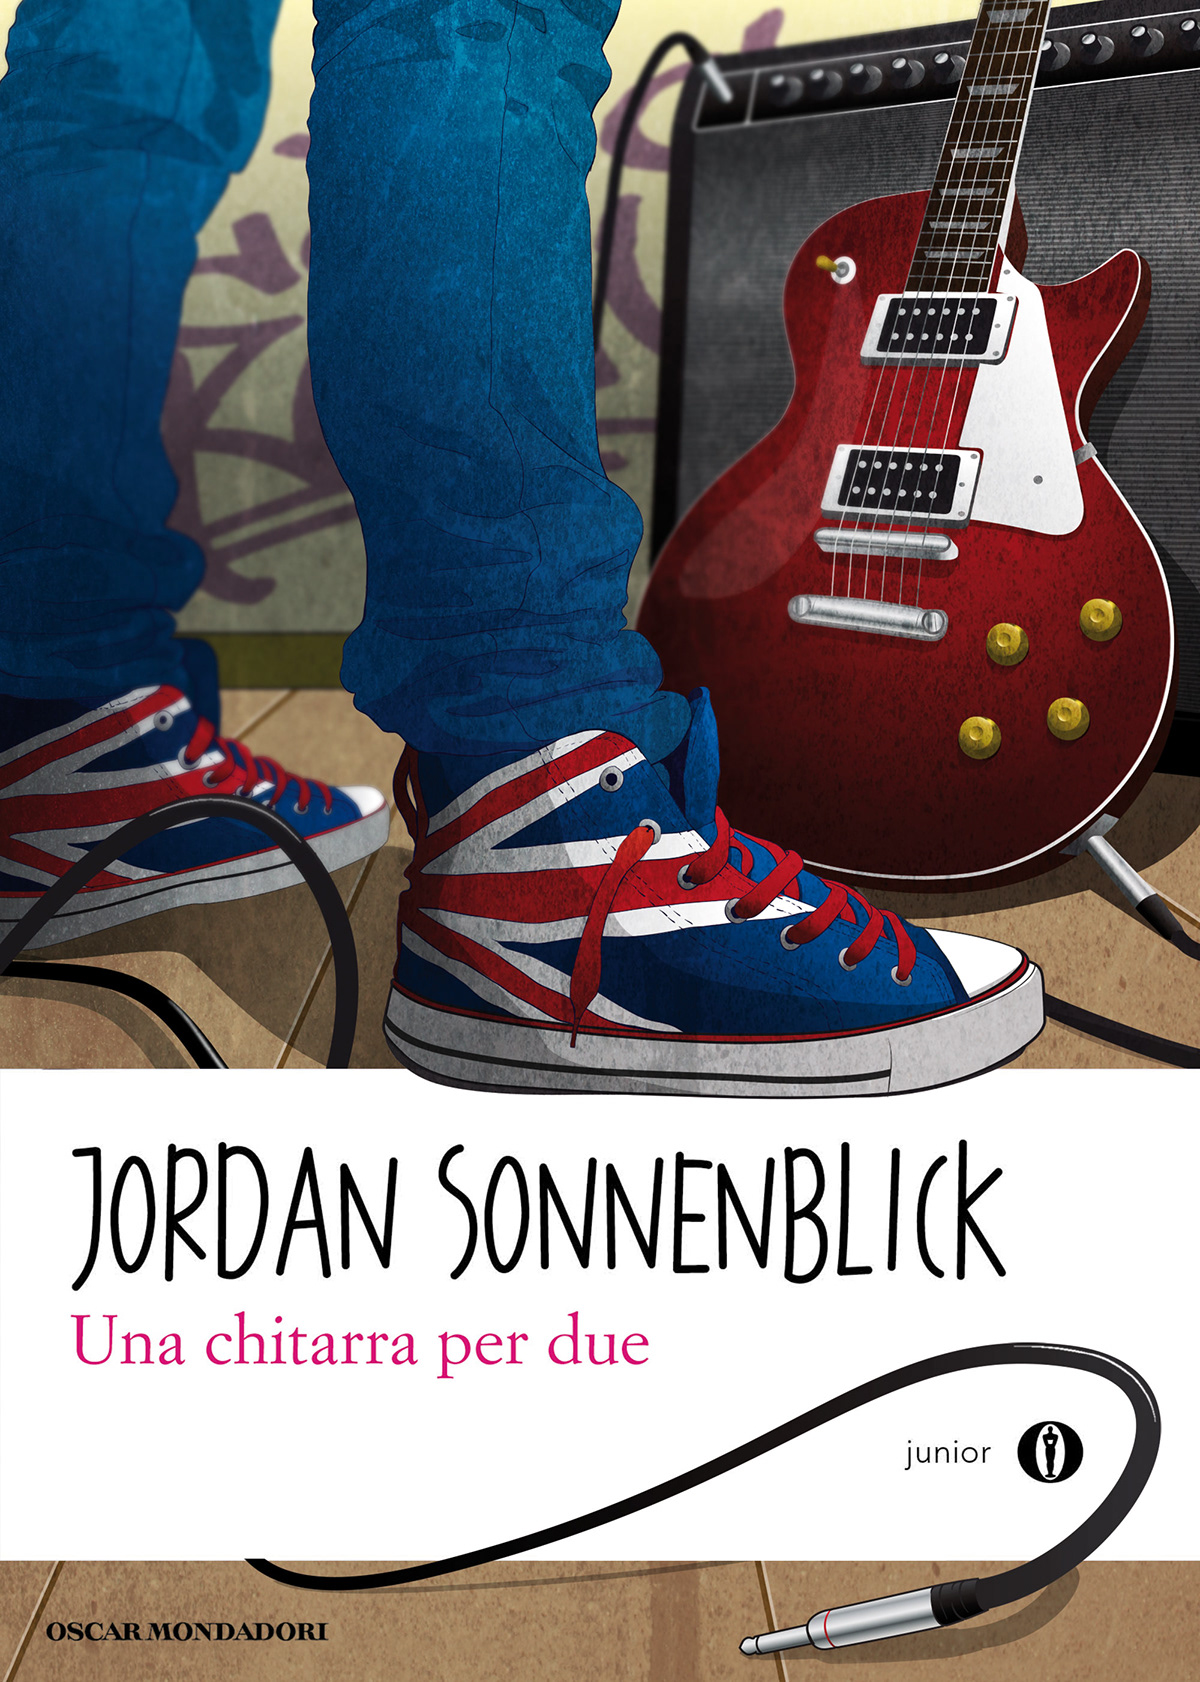 mondadori oscar mondadori cover copertina jordan sonnenblick vector guitar rock book libri per ragazzi unachitarraperdue